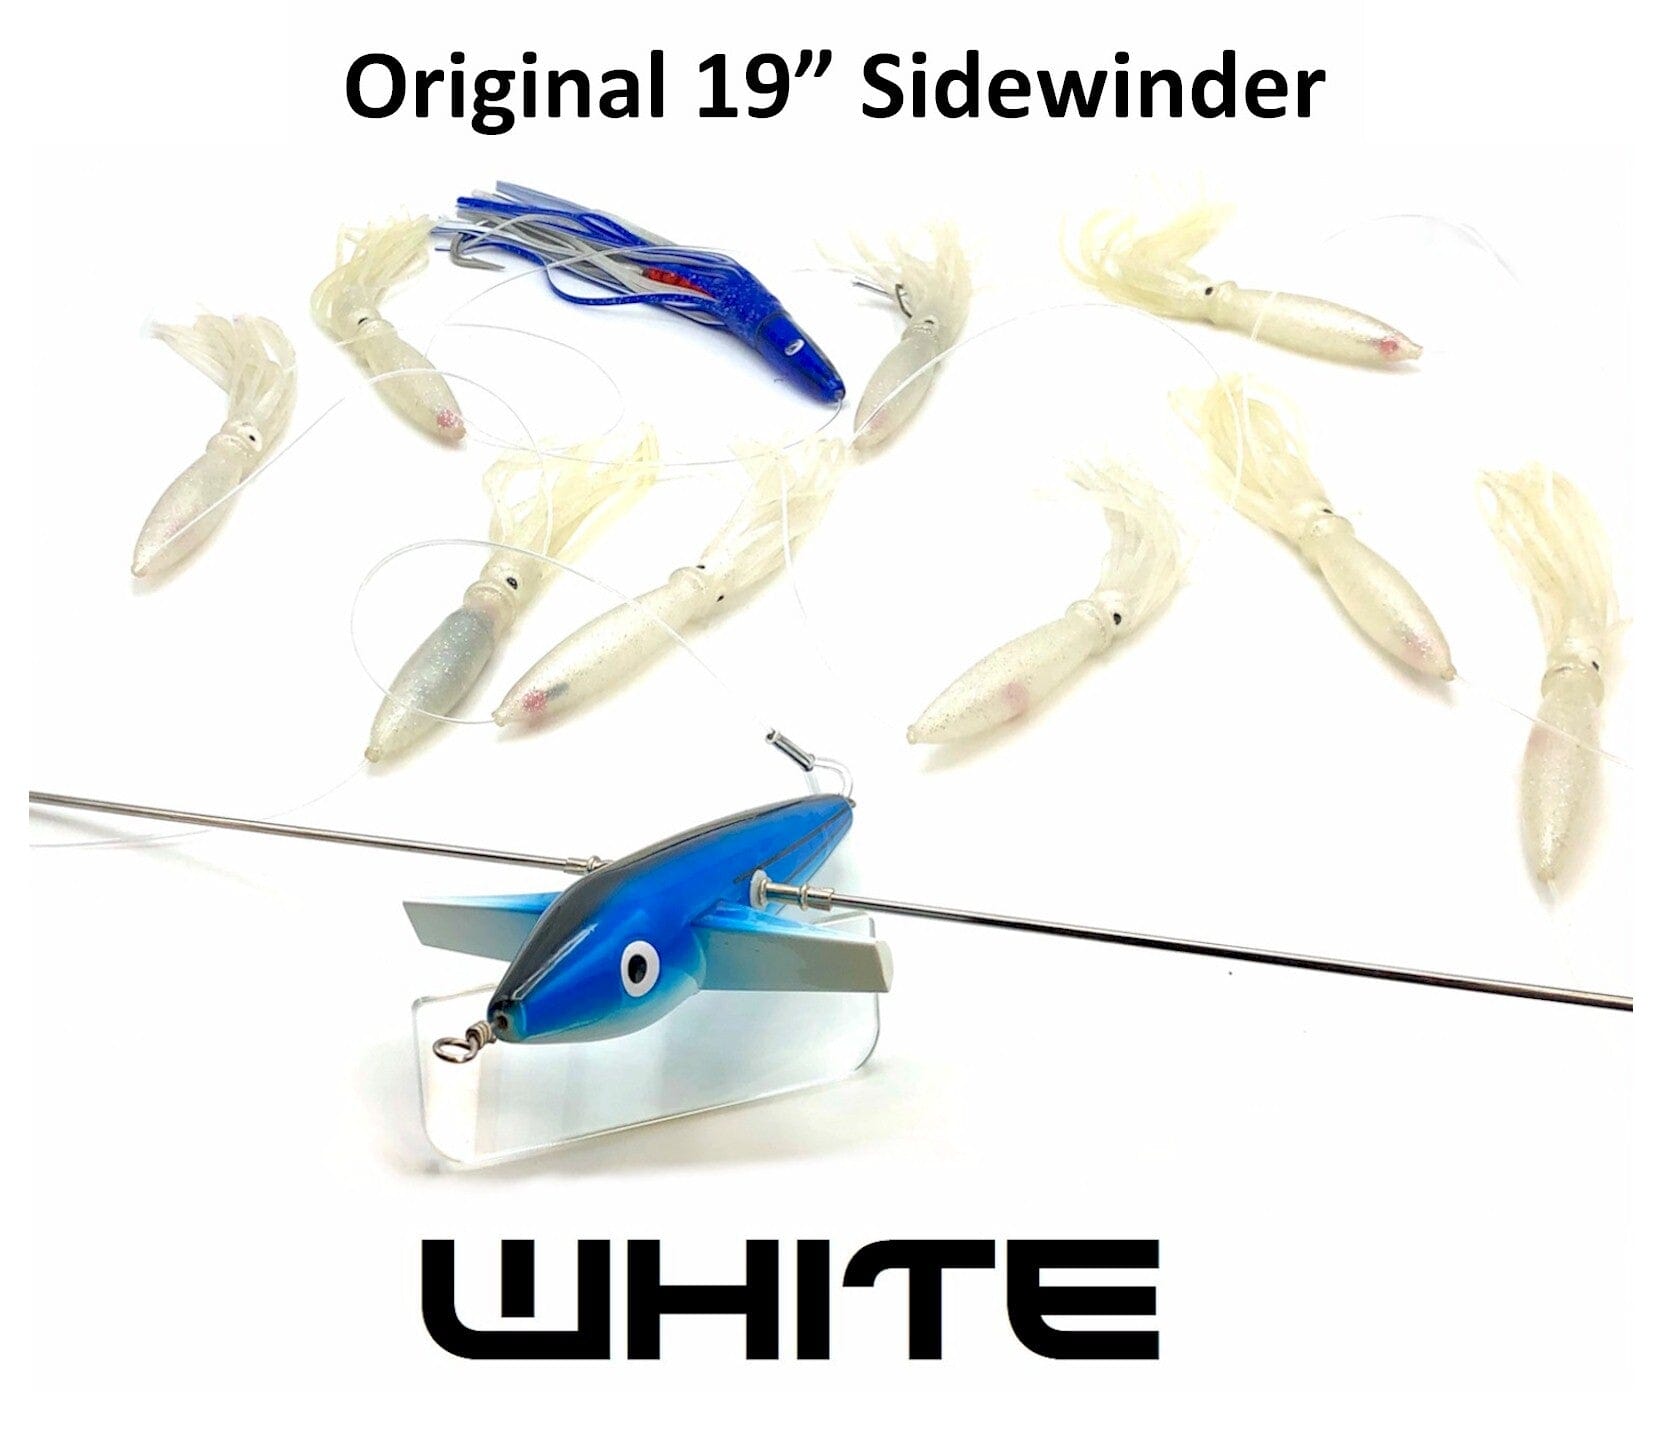 19" Sidewinder Directional Bar - Original Daisy Chains & Multi Bait Rigs Tormenter Ocean White Port 